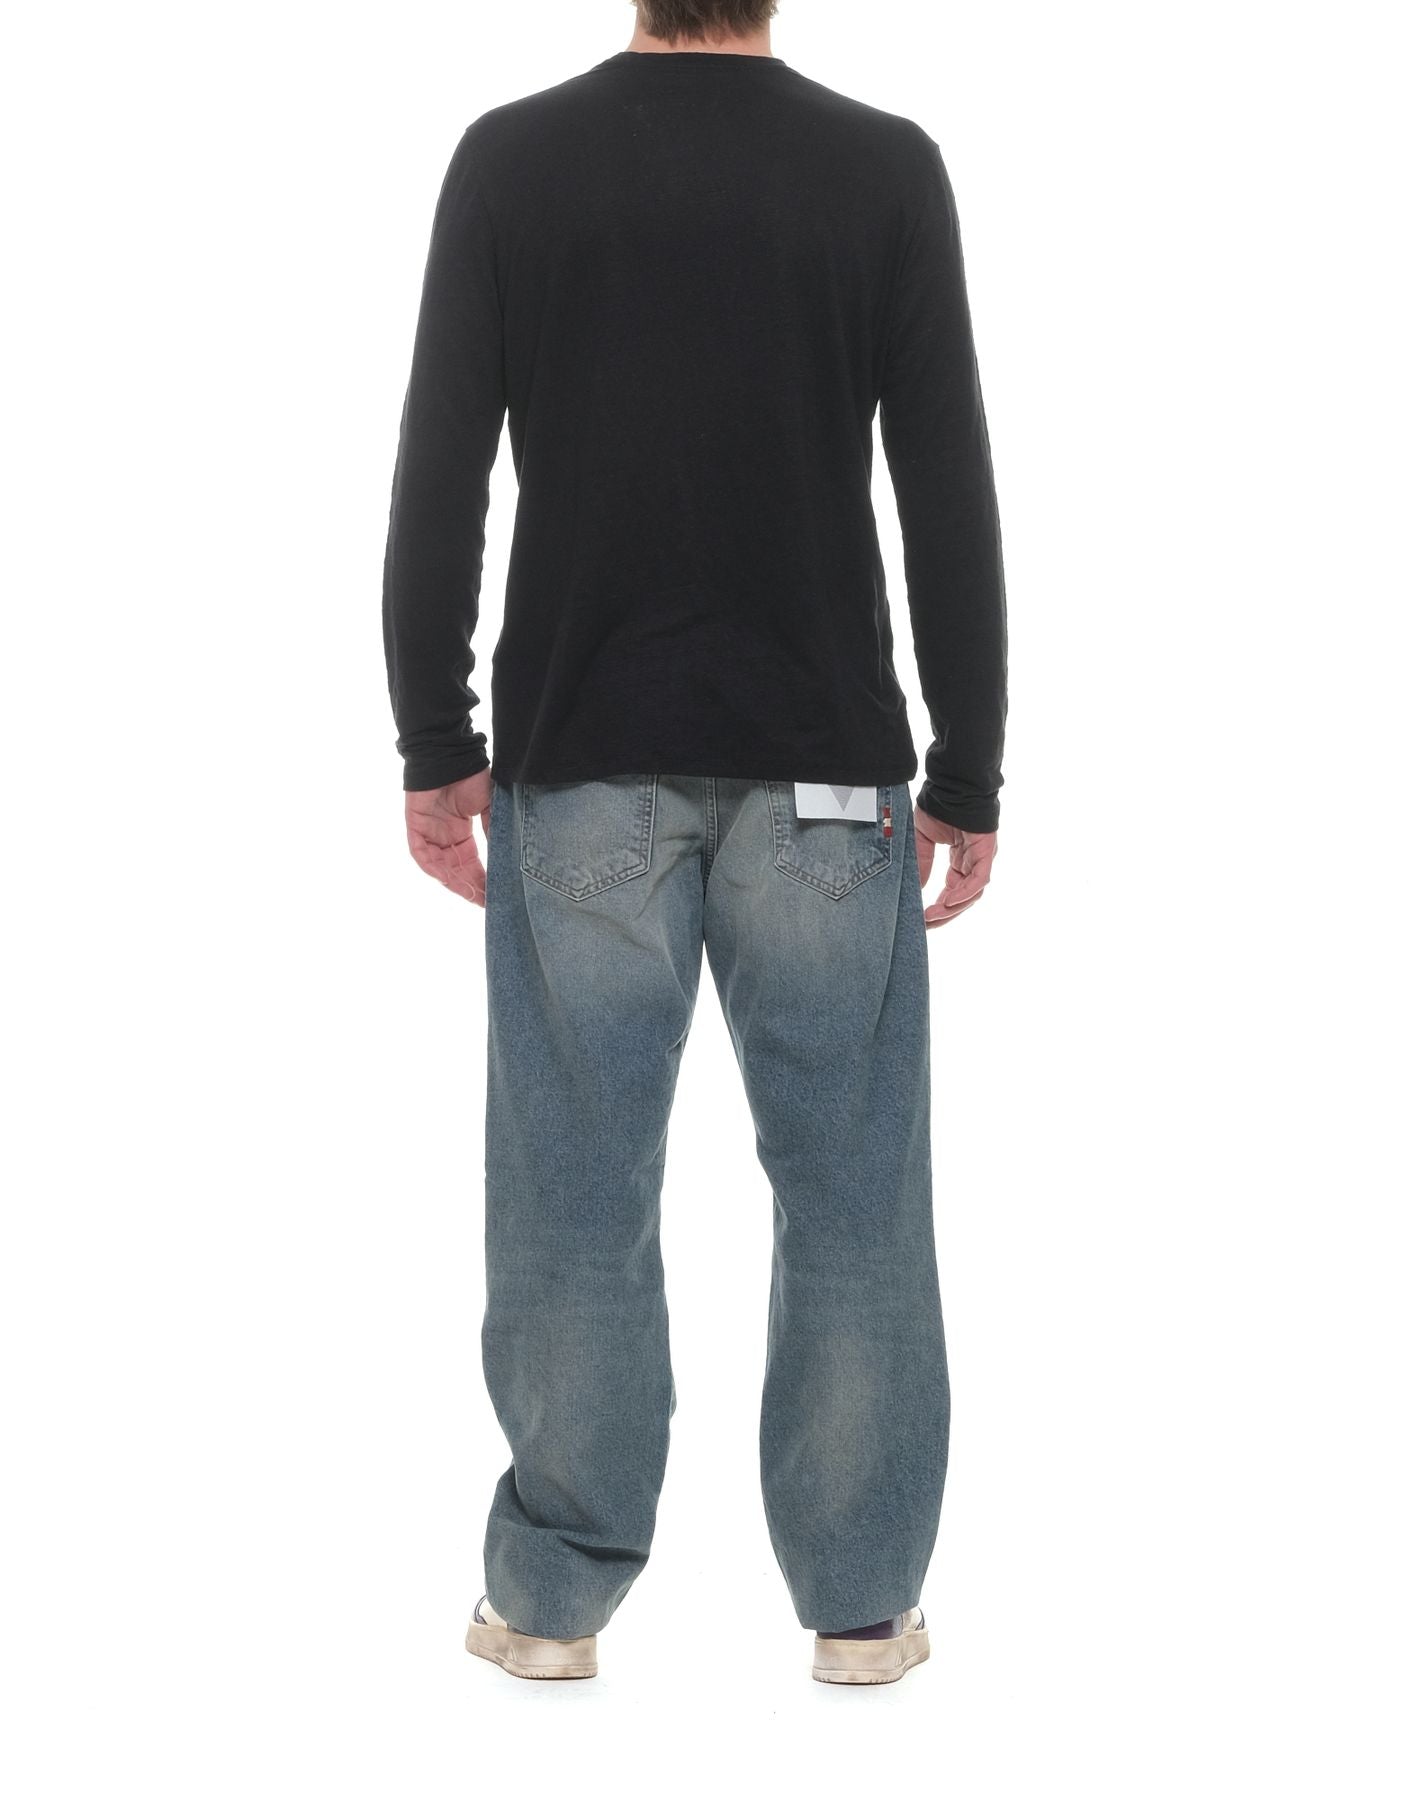 Jeans für Mann AMU010D4692504 Super Dirty Amish